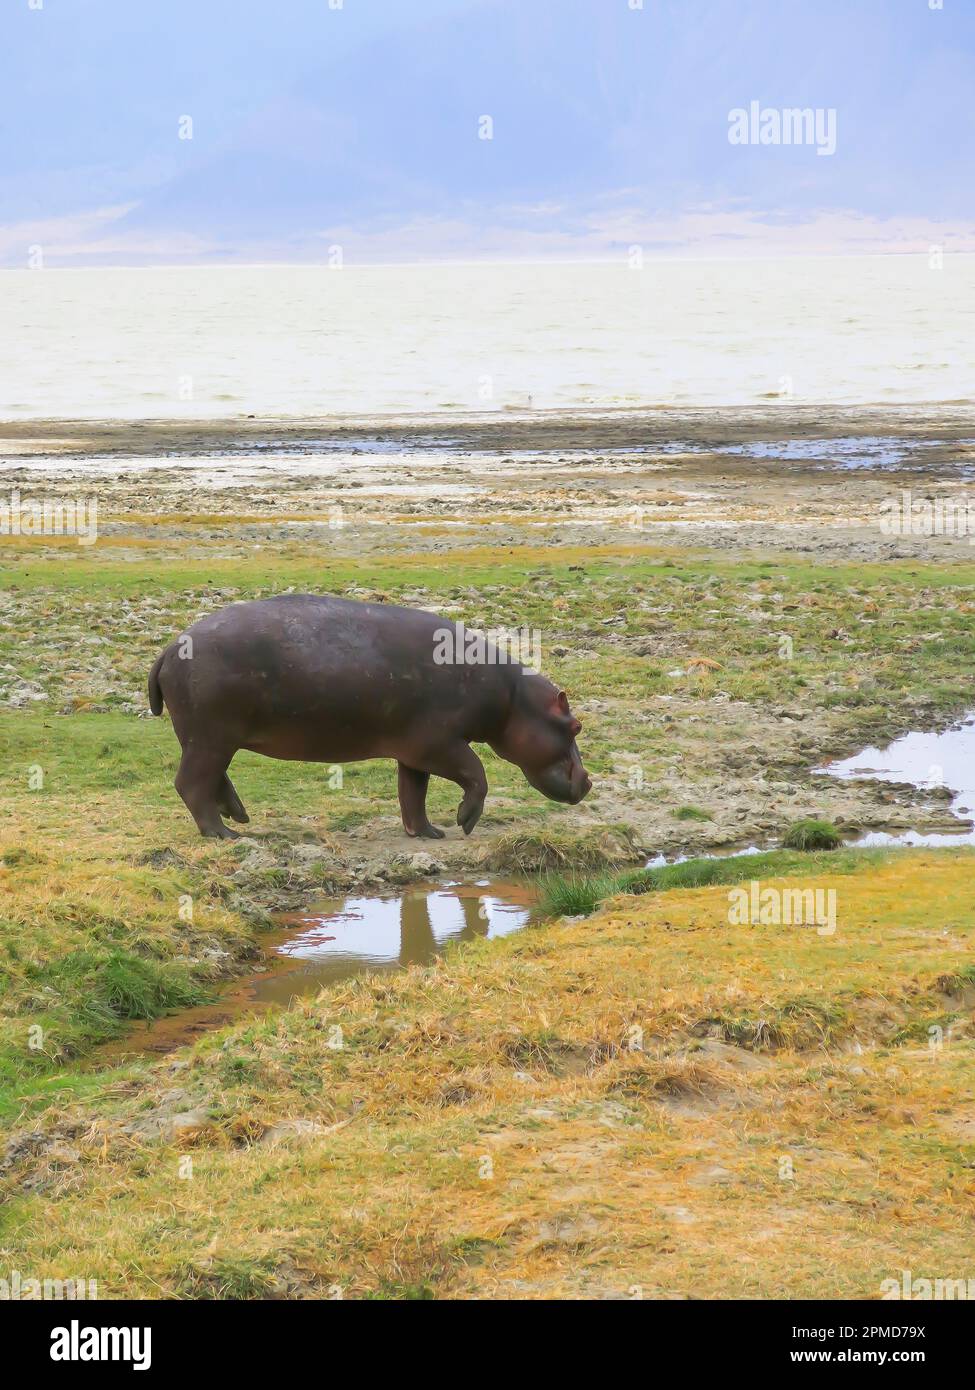 Hippopotamus Finding Nourishment on the Flat Land, Tanzania, East Africa Stock Photo